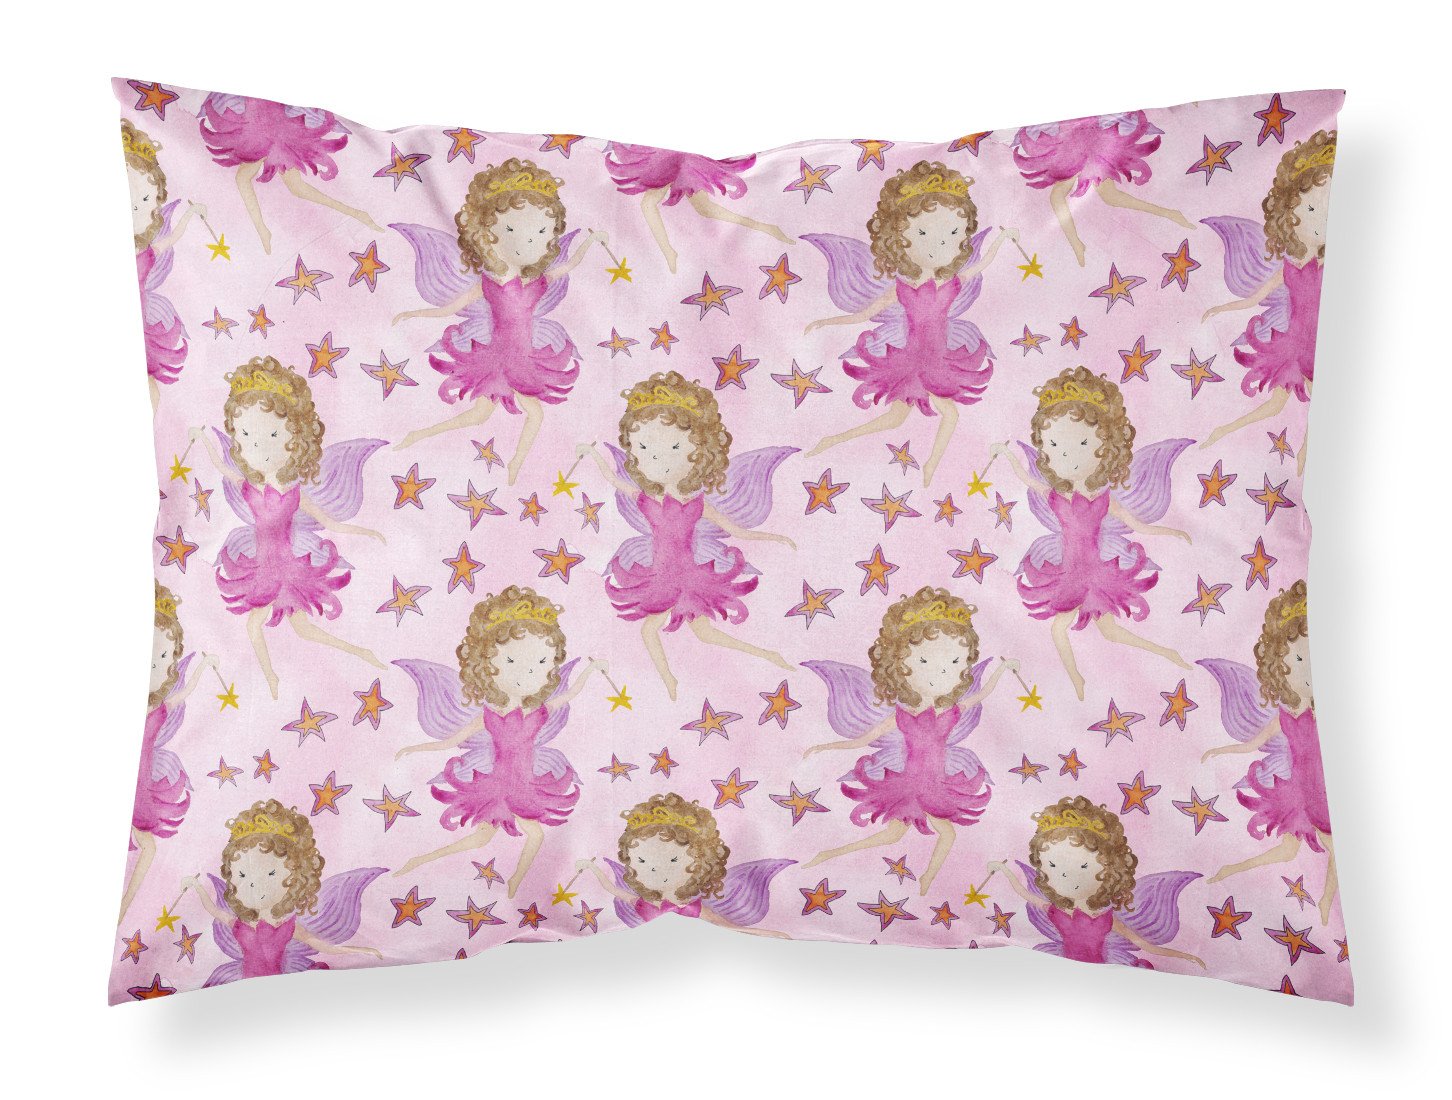 Watercolor Fairy Princess on Pink Fabric Standard Pillowcase BB7547PILLOWCASE by Caroline's Treasures